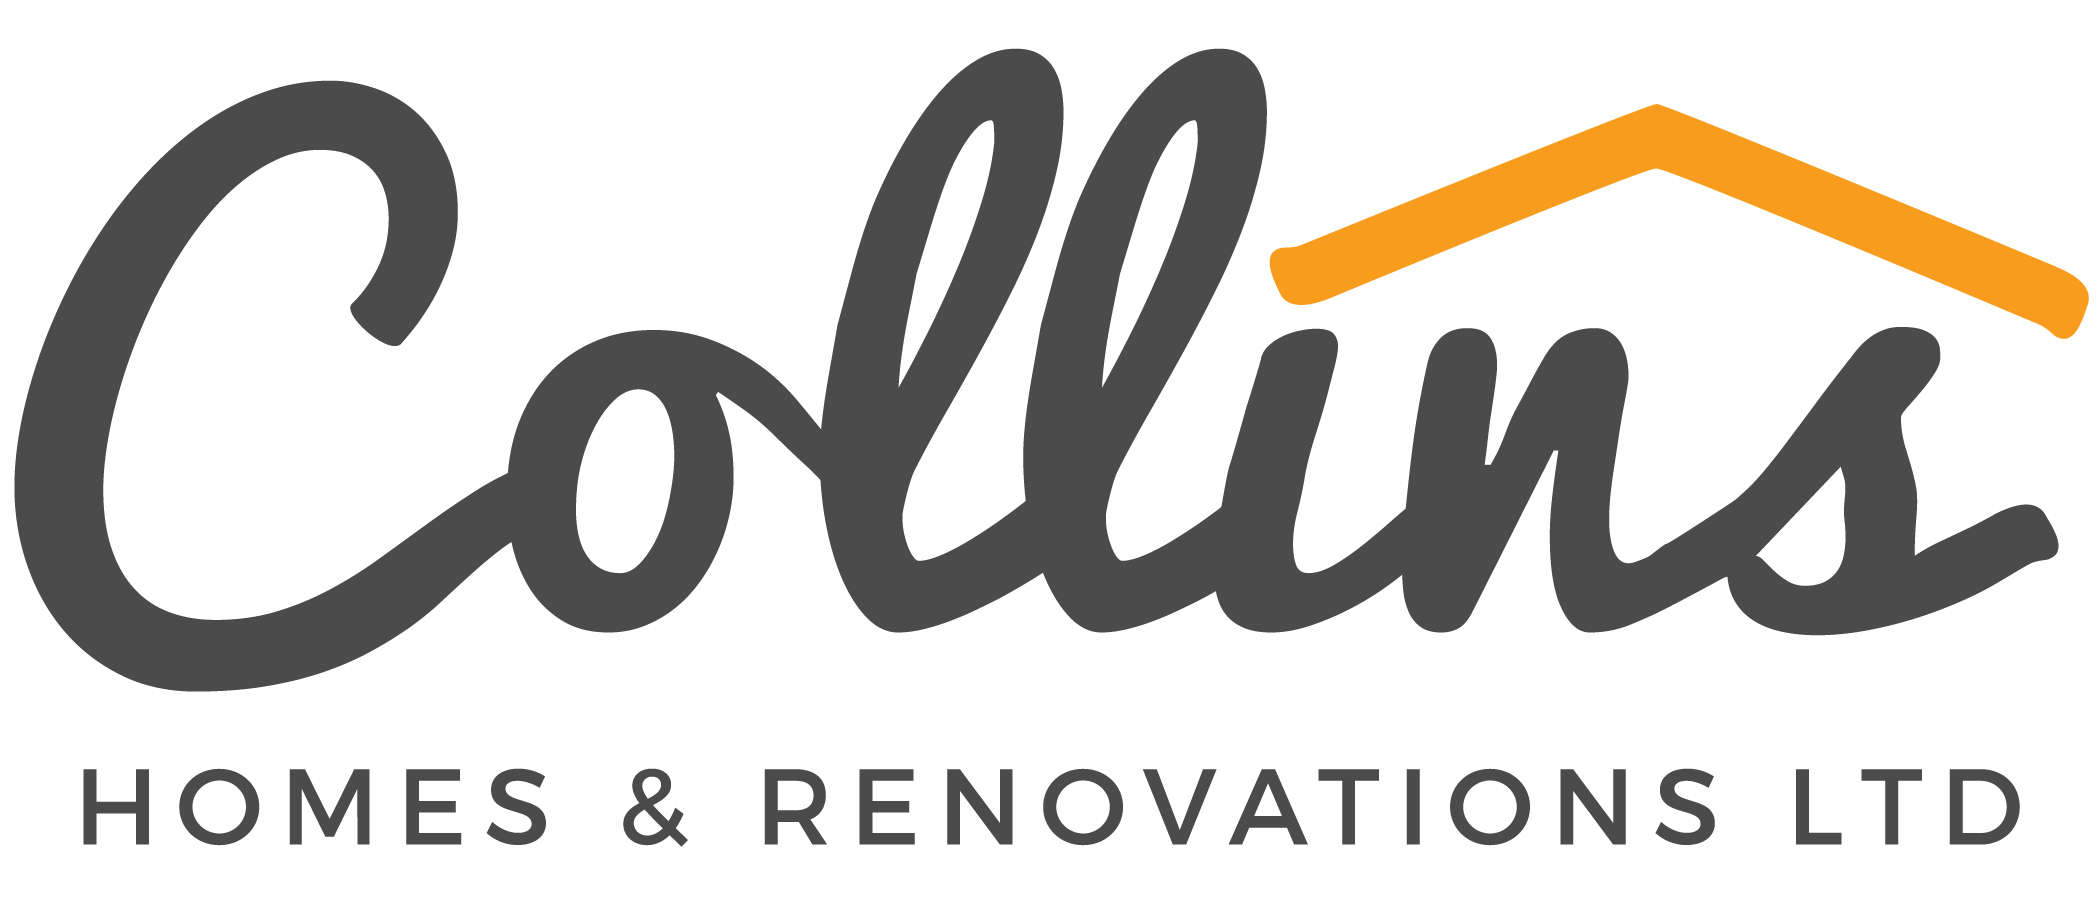 Collins Homes and Renovations Ltd. Logo